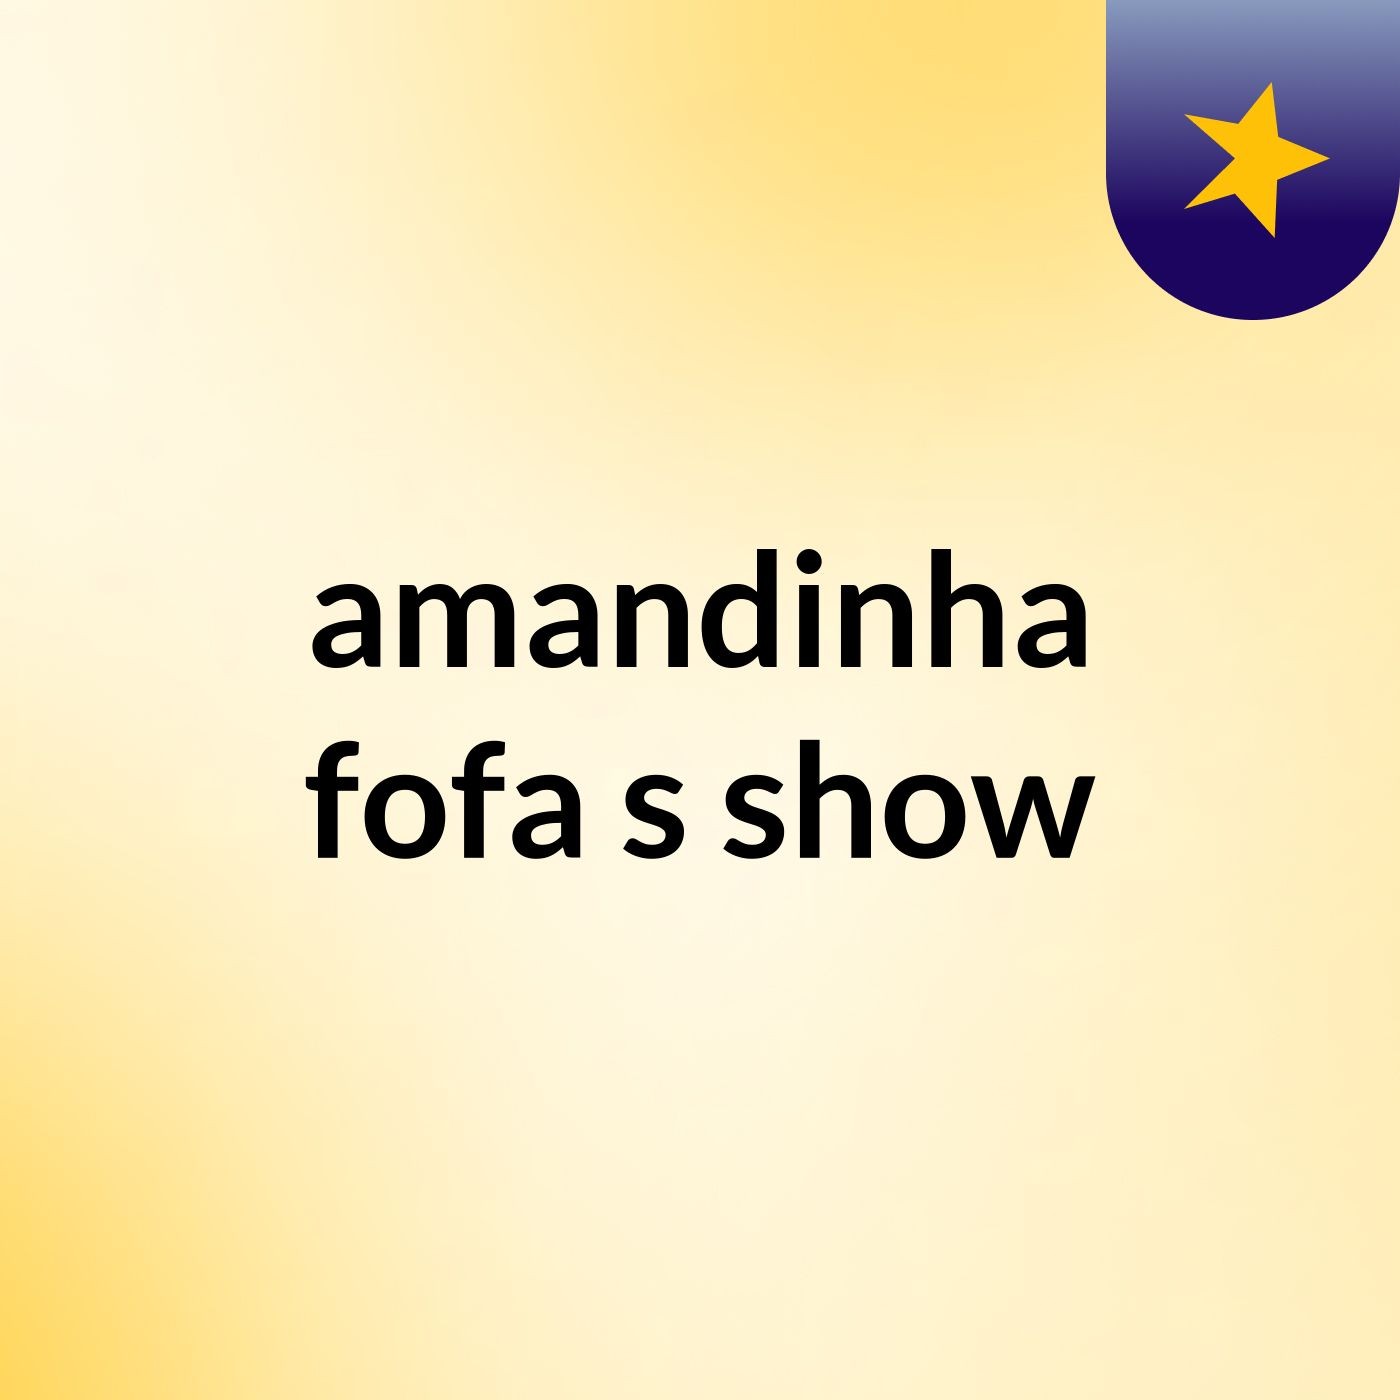 amandinha fofa's show